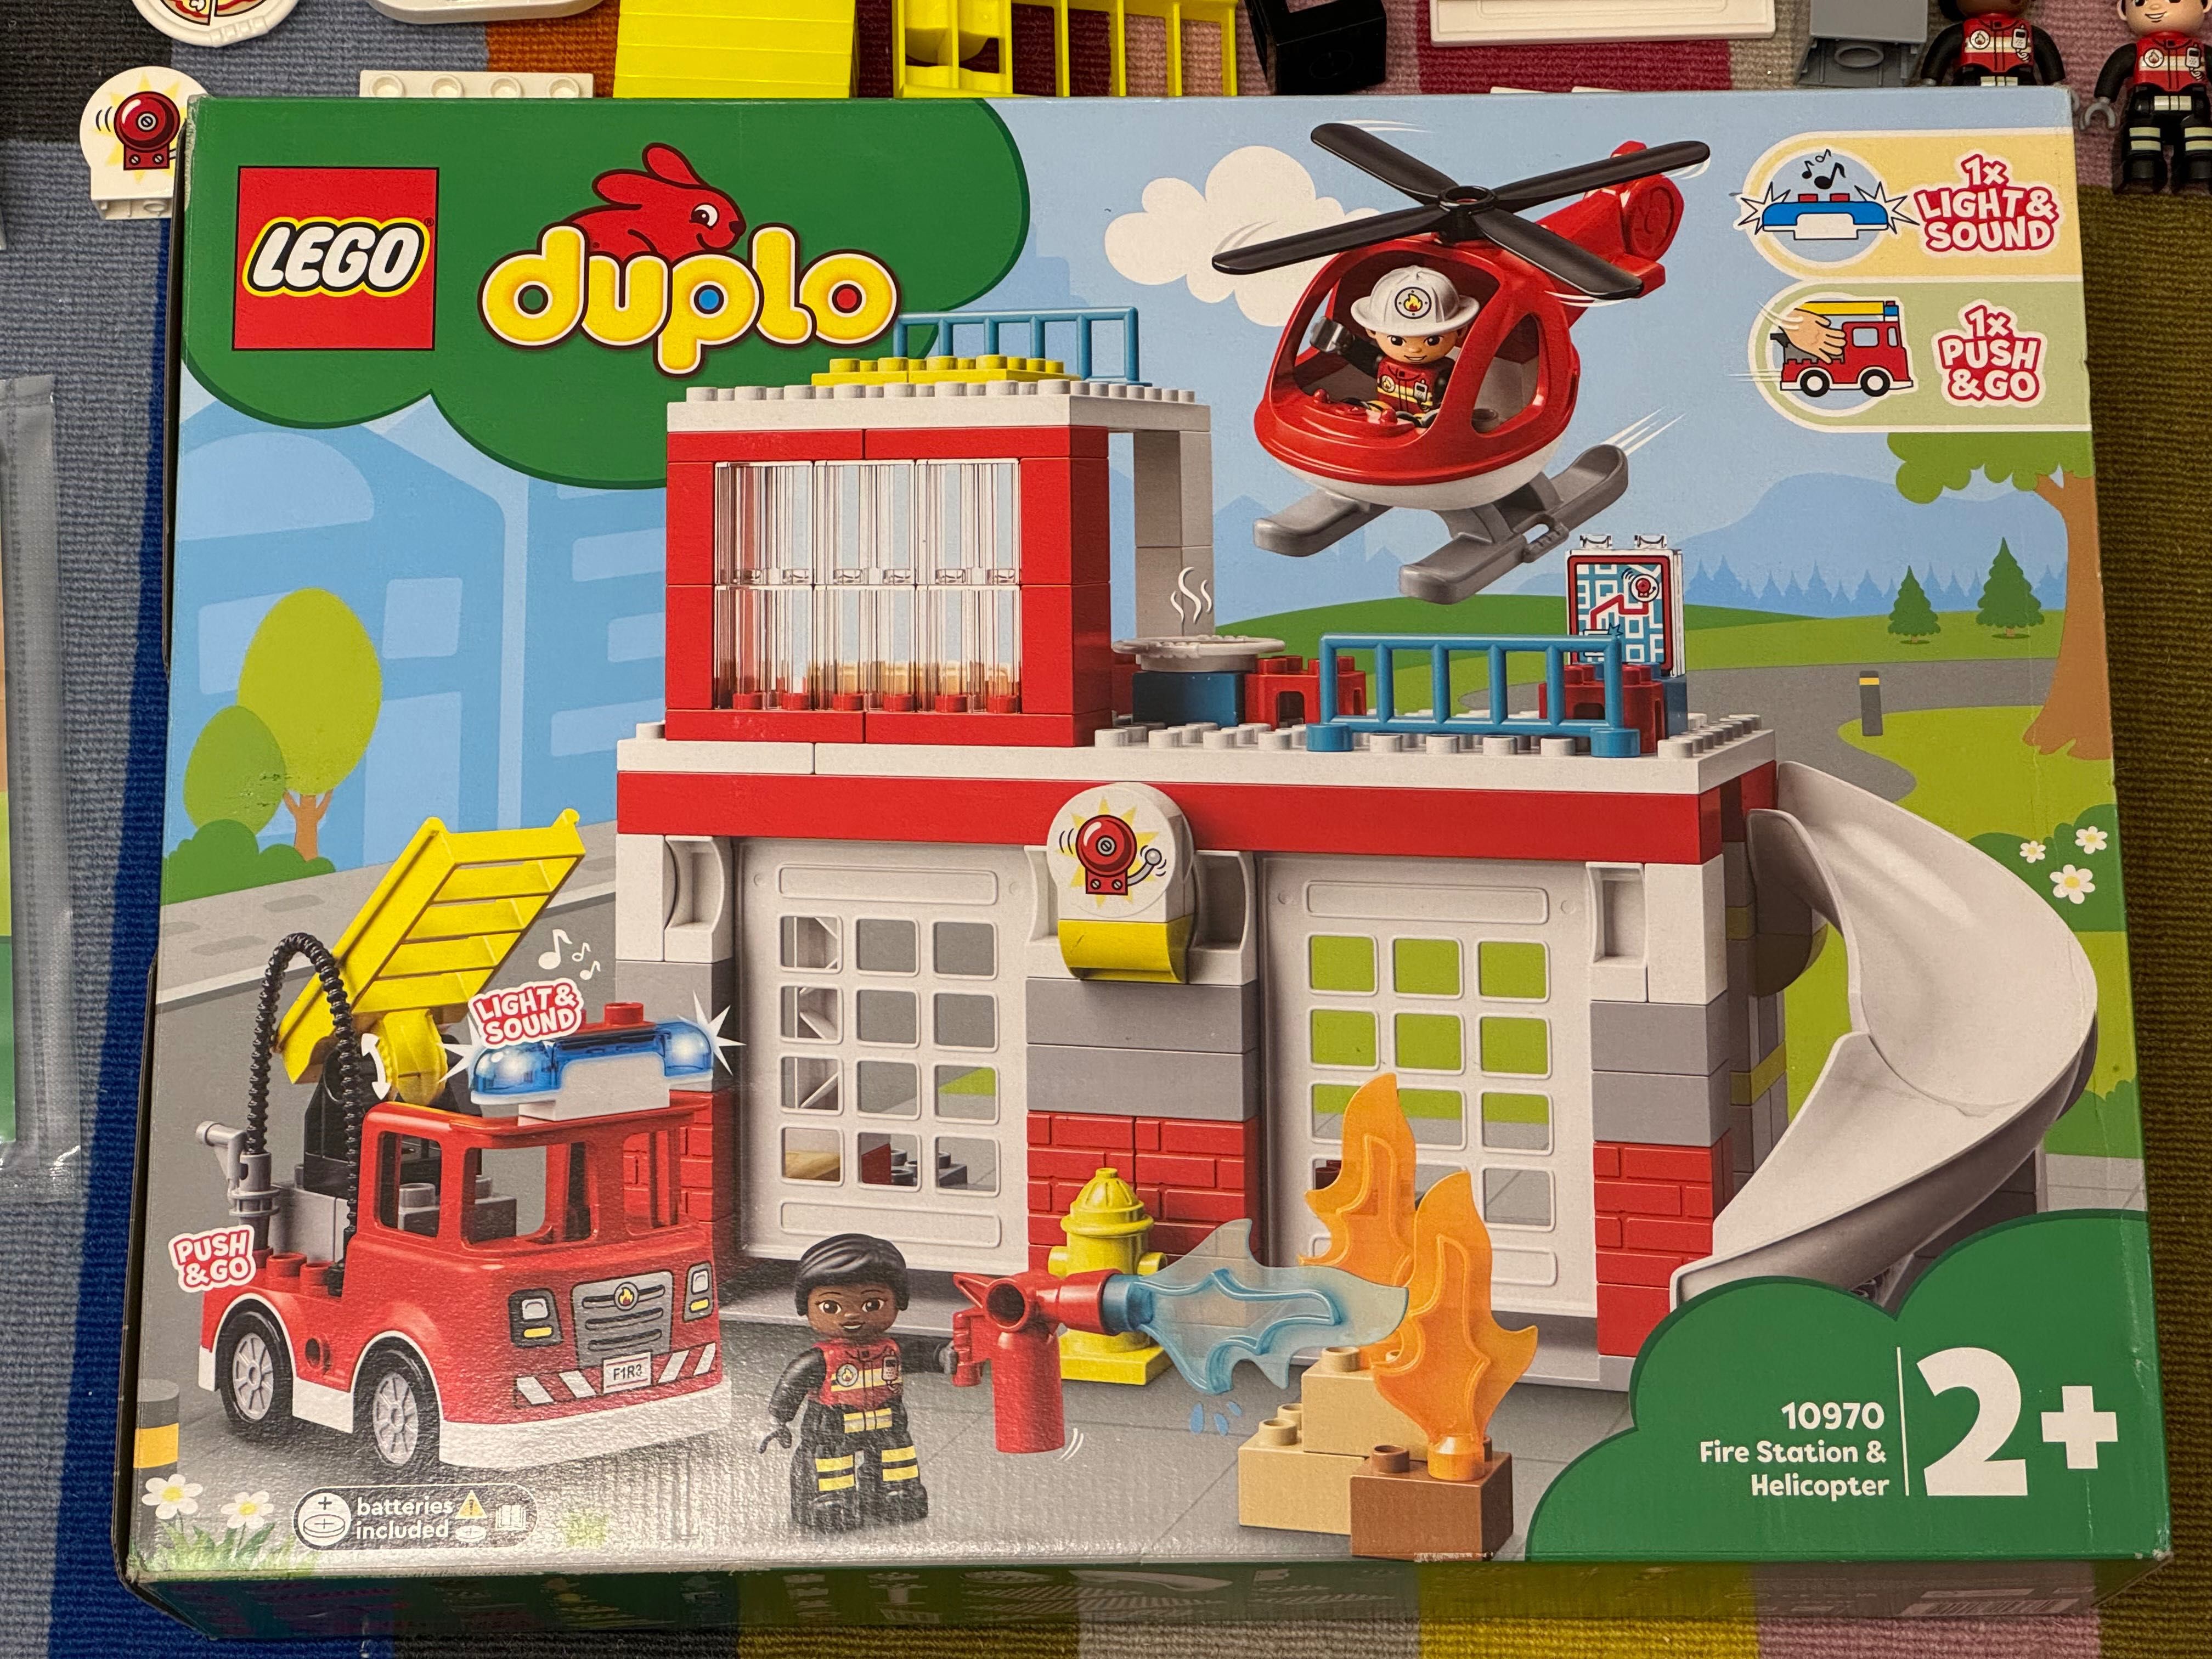 Remiza strażacka i helikopter 10970 | DUPLO - LEGO